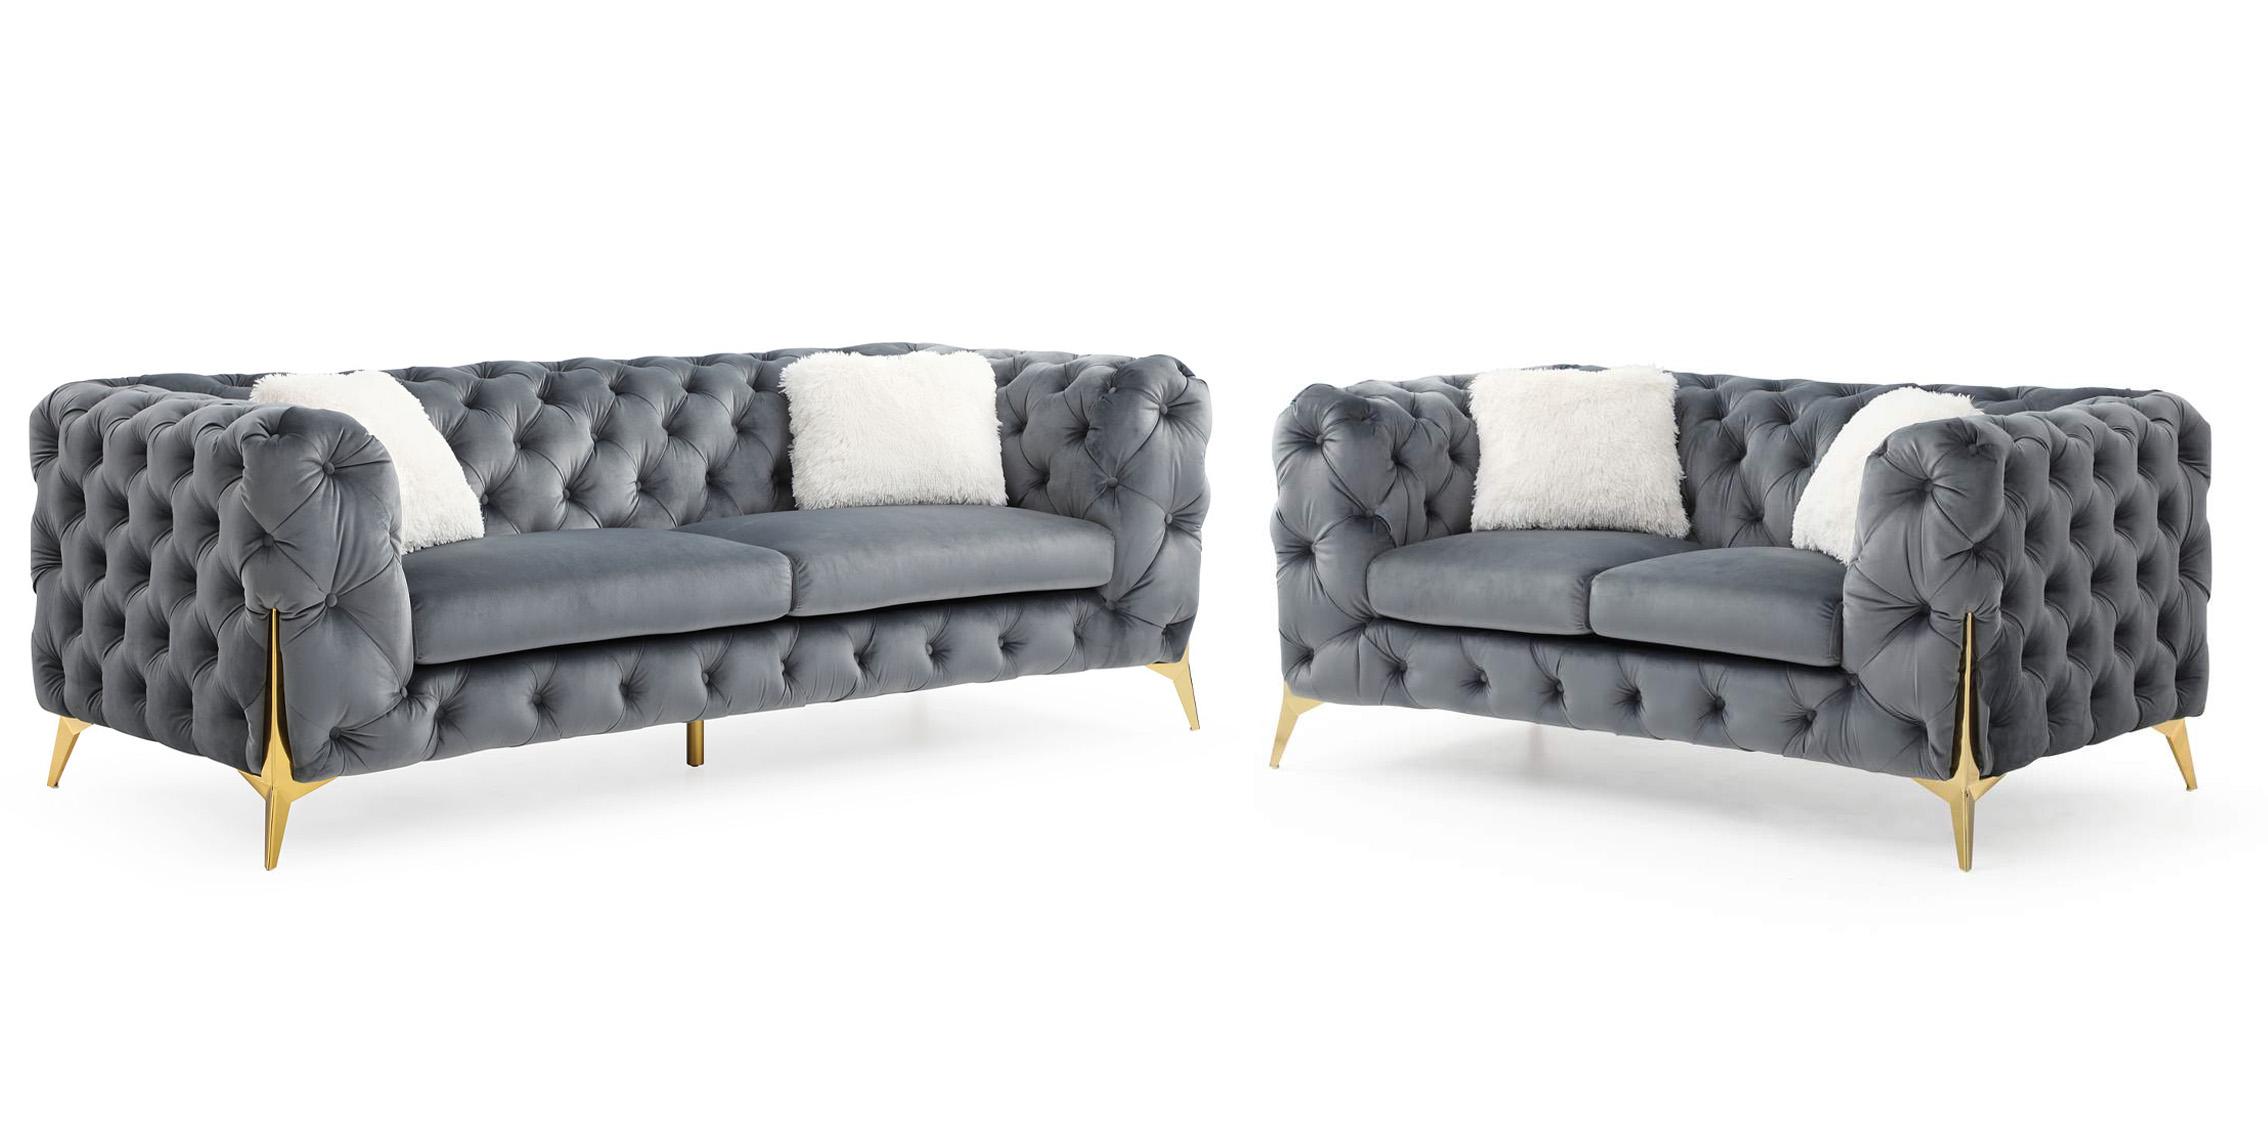 Contemporary, Modern Sofa Set MODERNO GHF-808857608970 in Gray Fabric